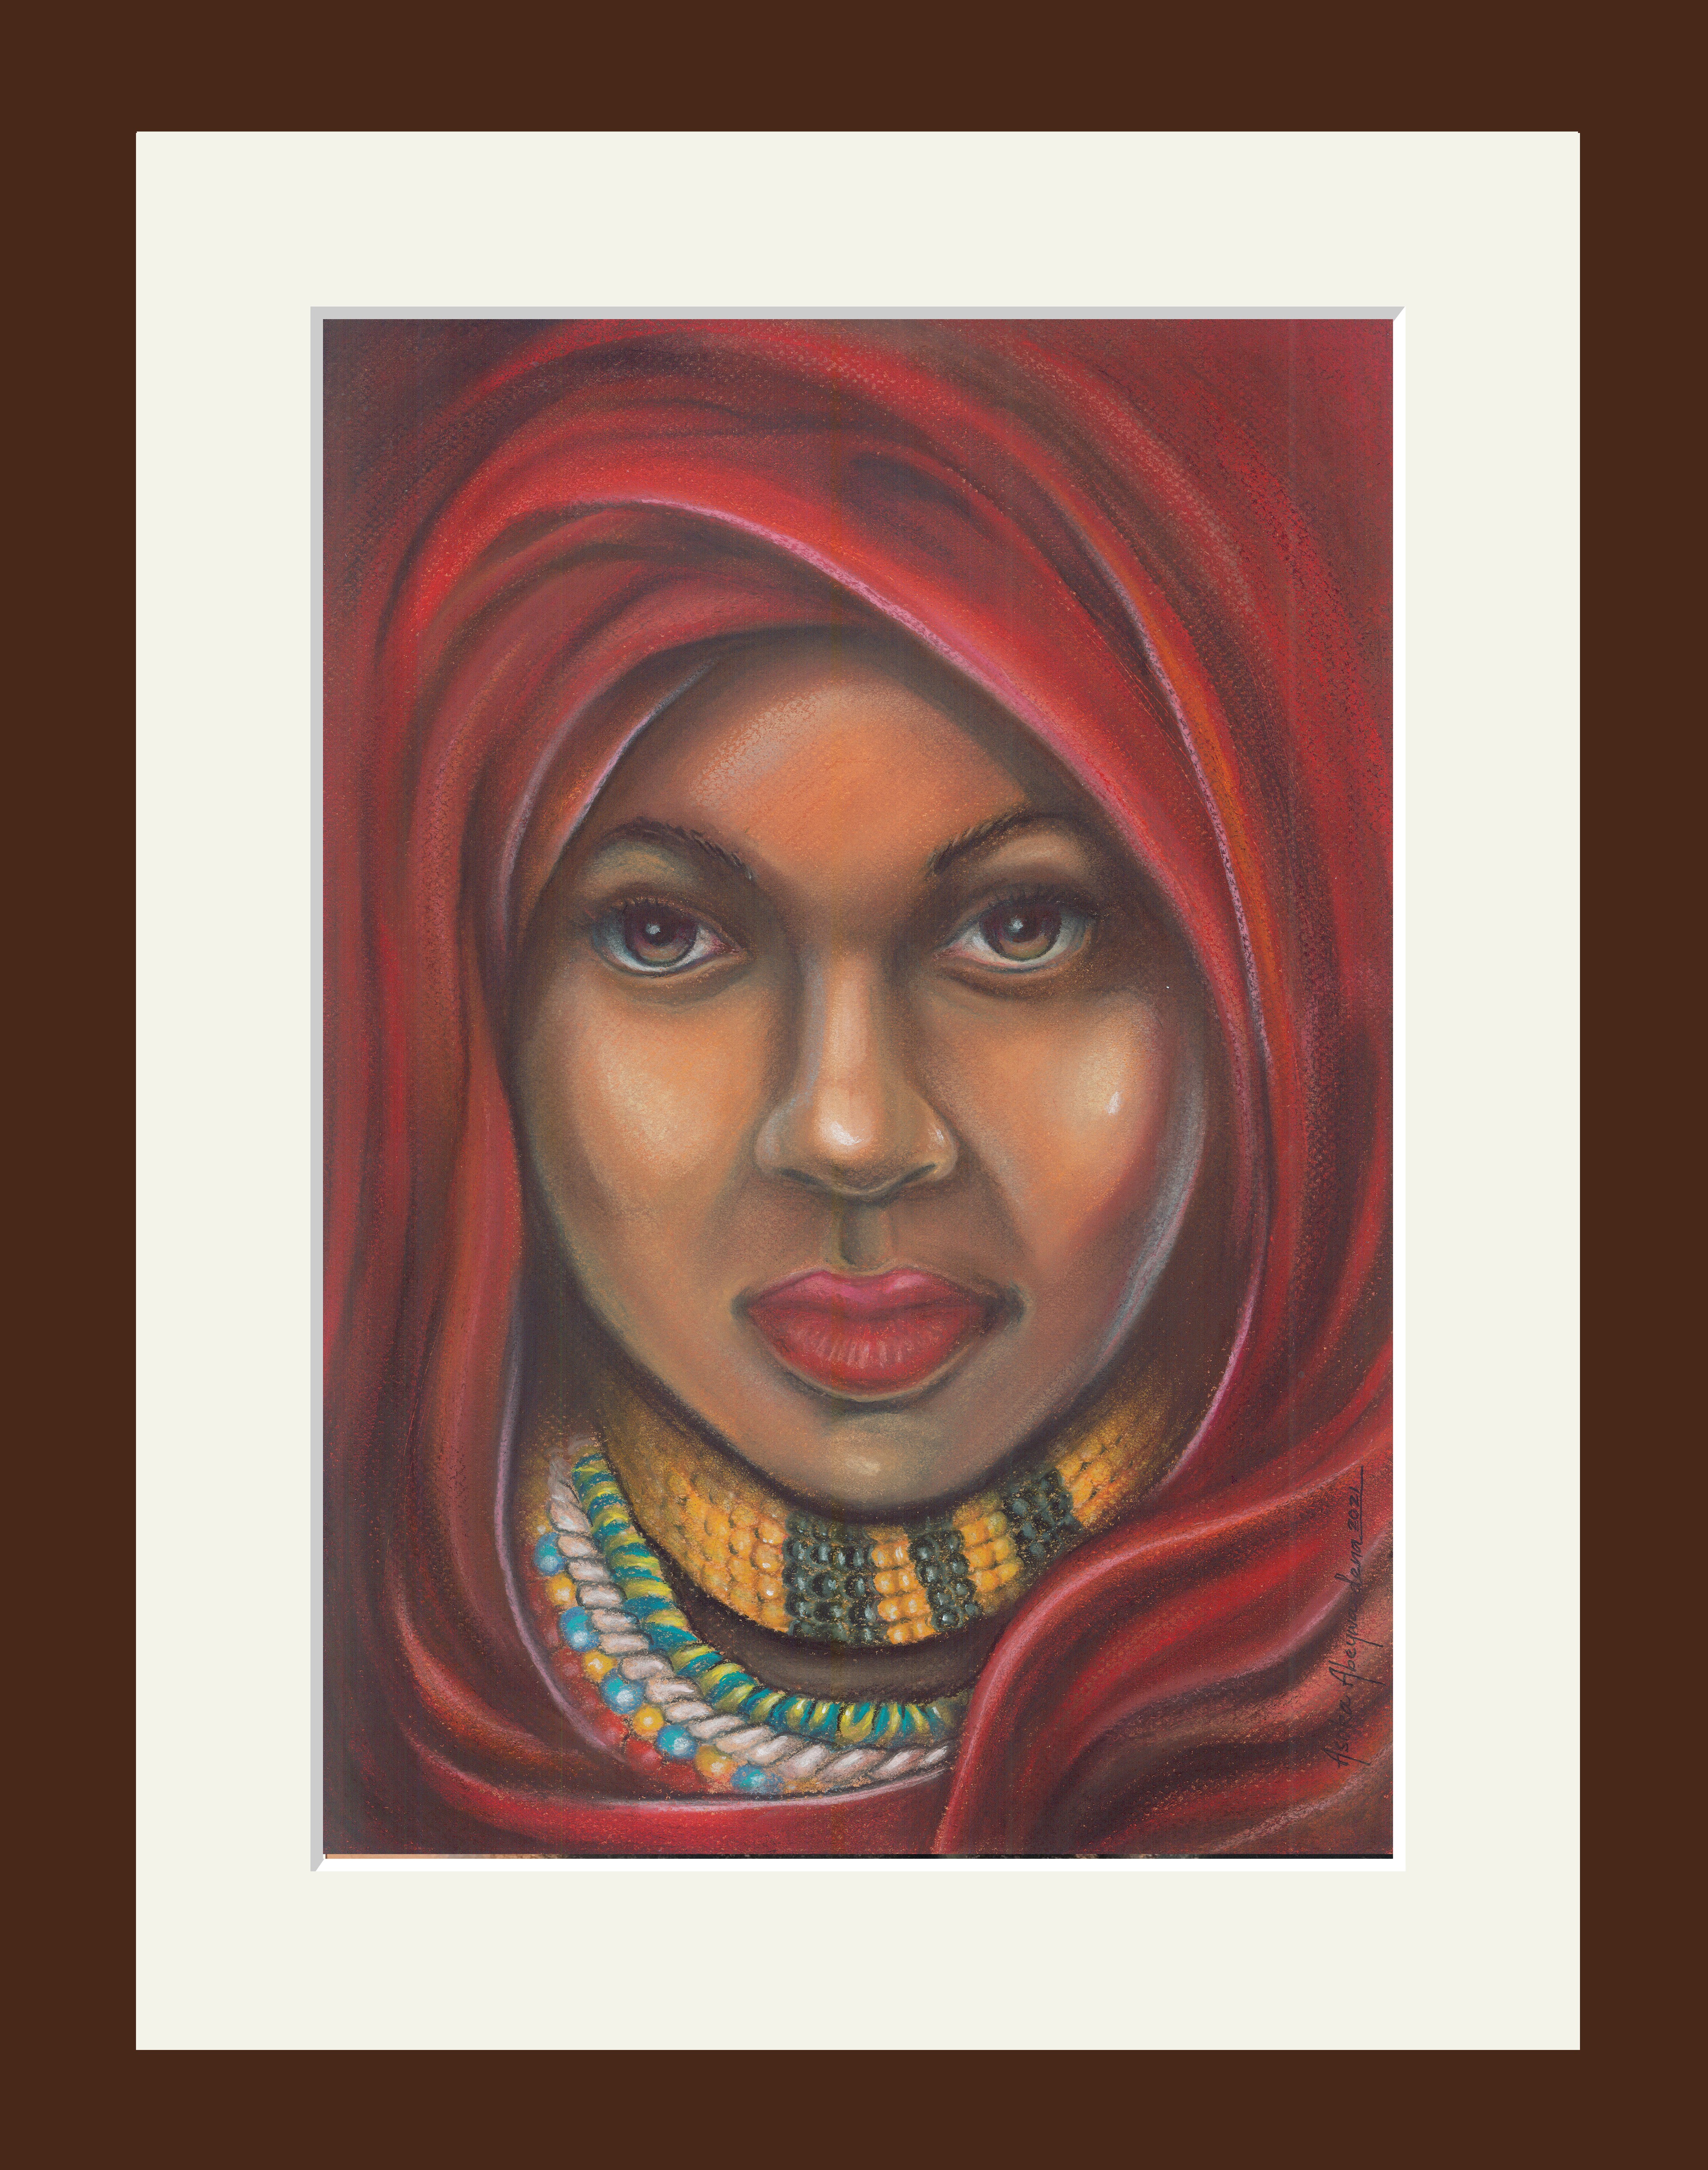 African Tribal Woman in Red by ASOKA ABEYWARDENA